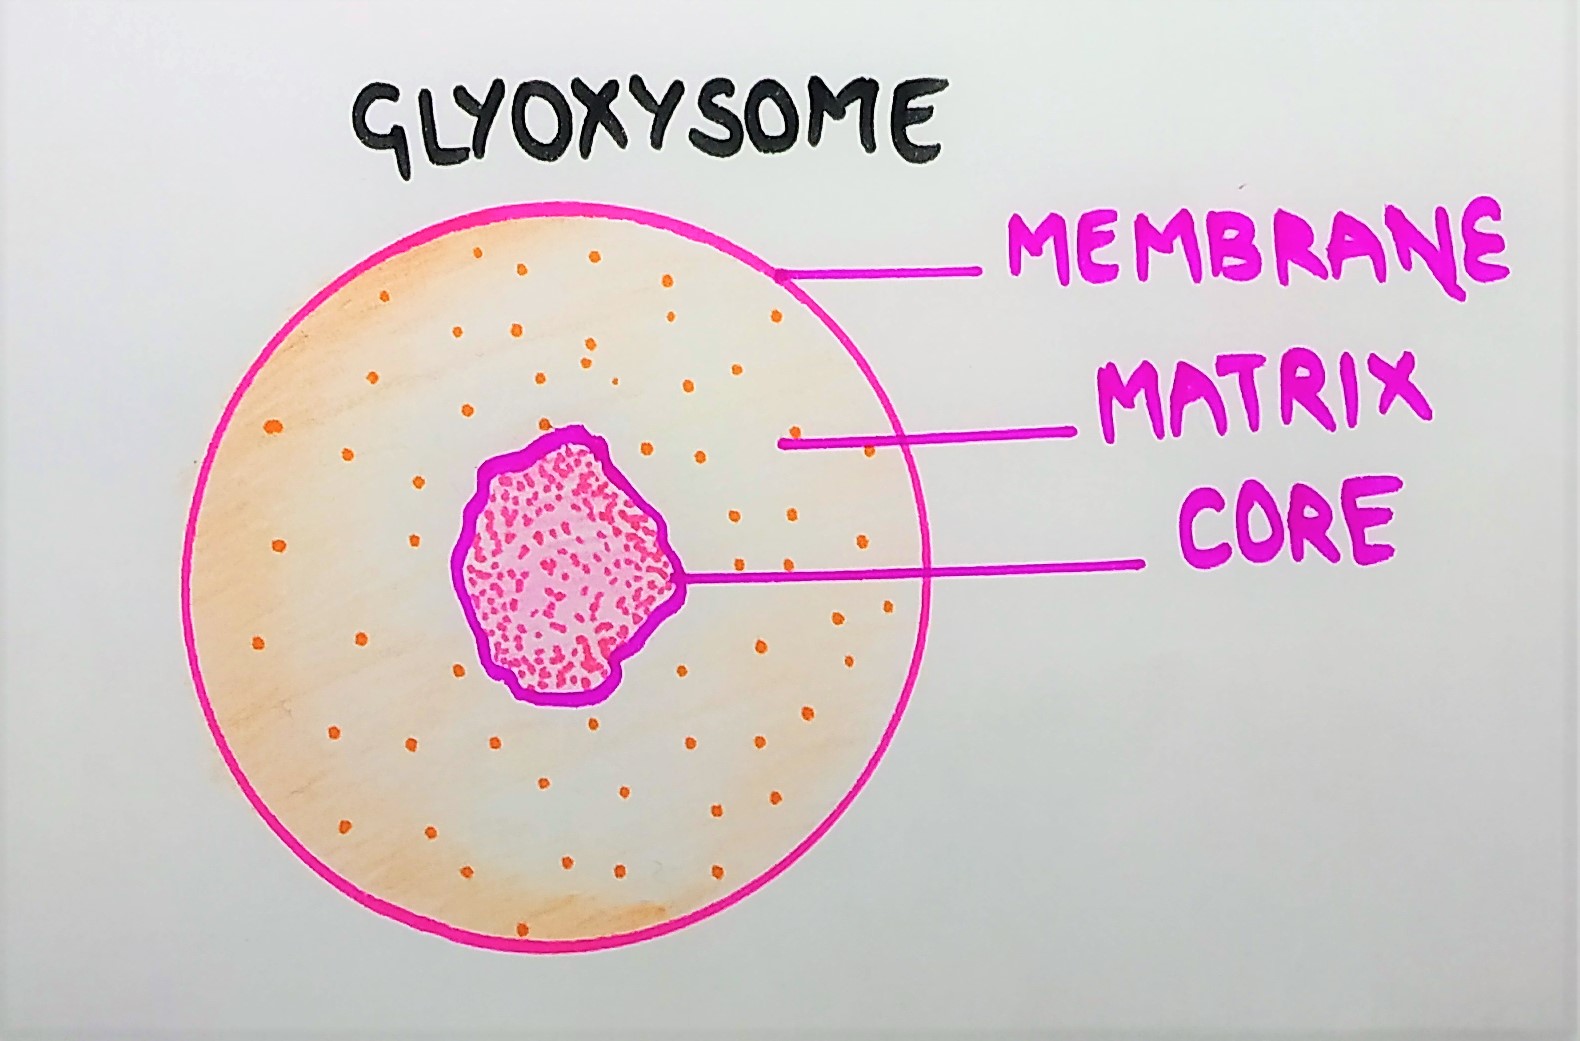 glyoxysome image